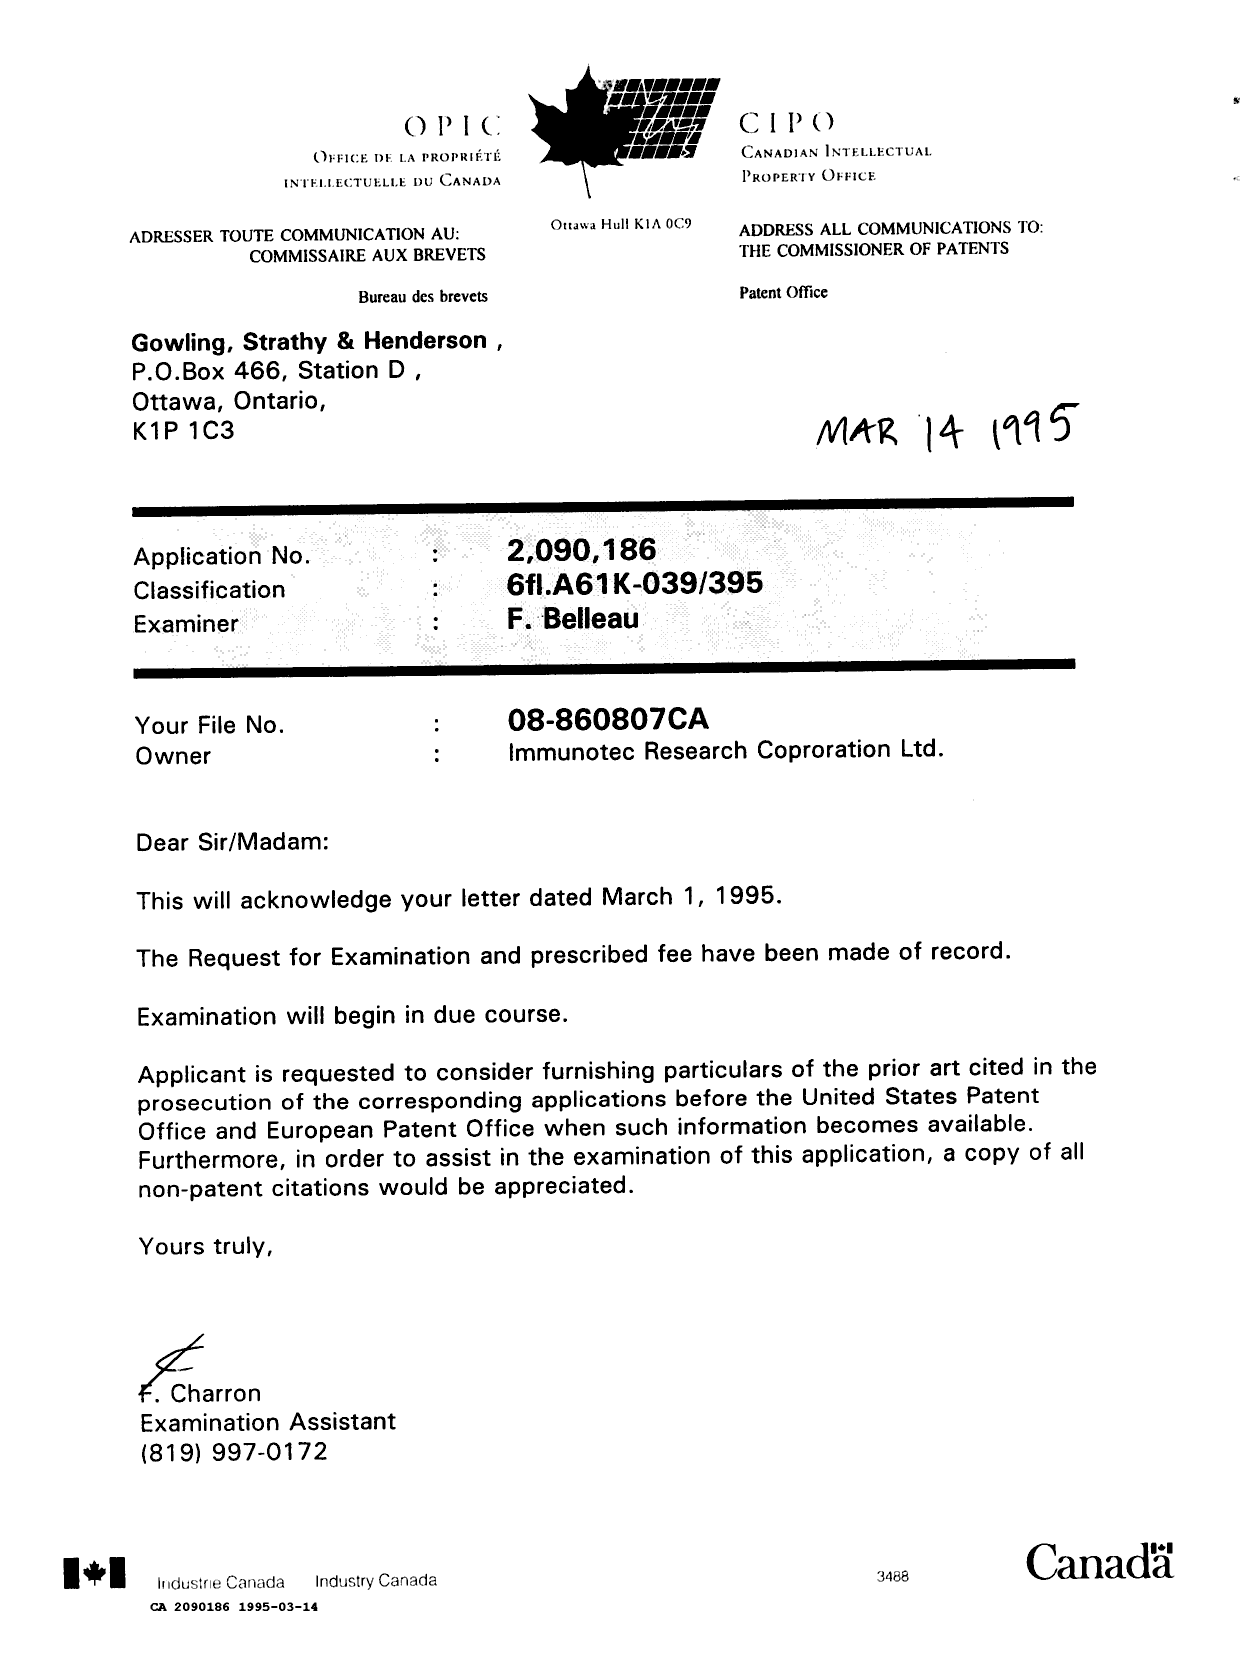 Canadian Patent Document 2090186. Correspondence 19941214. Image 1 of 1